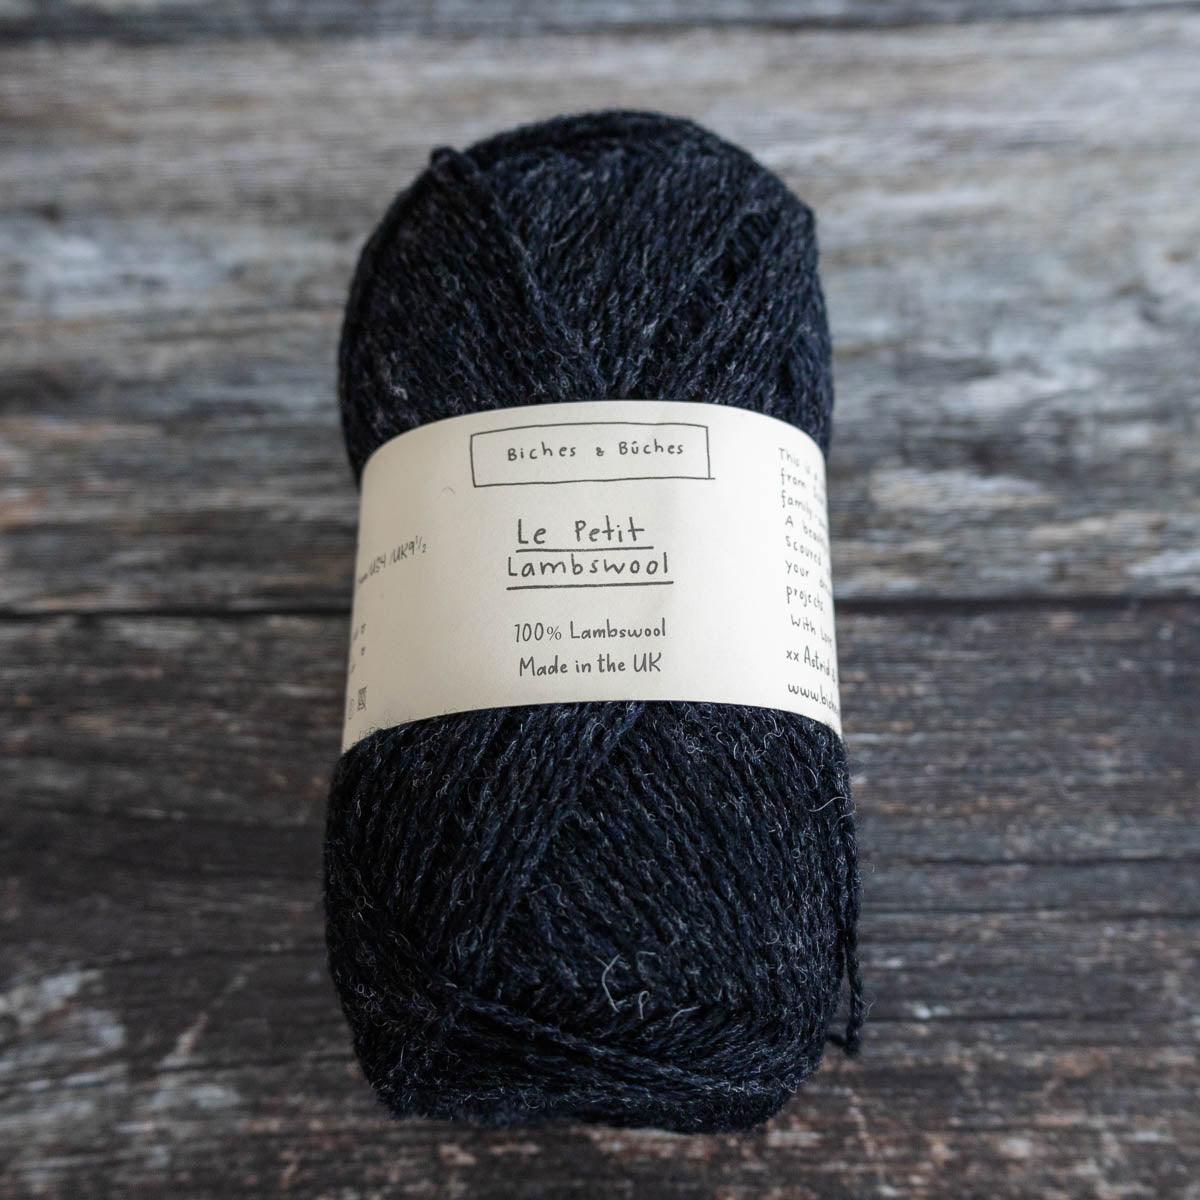 Biches & Bûches Biches & Bûches Le Petit Lambswool - Very Dark Grey - 4ply Knitting Yarn